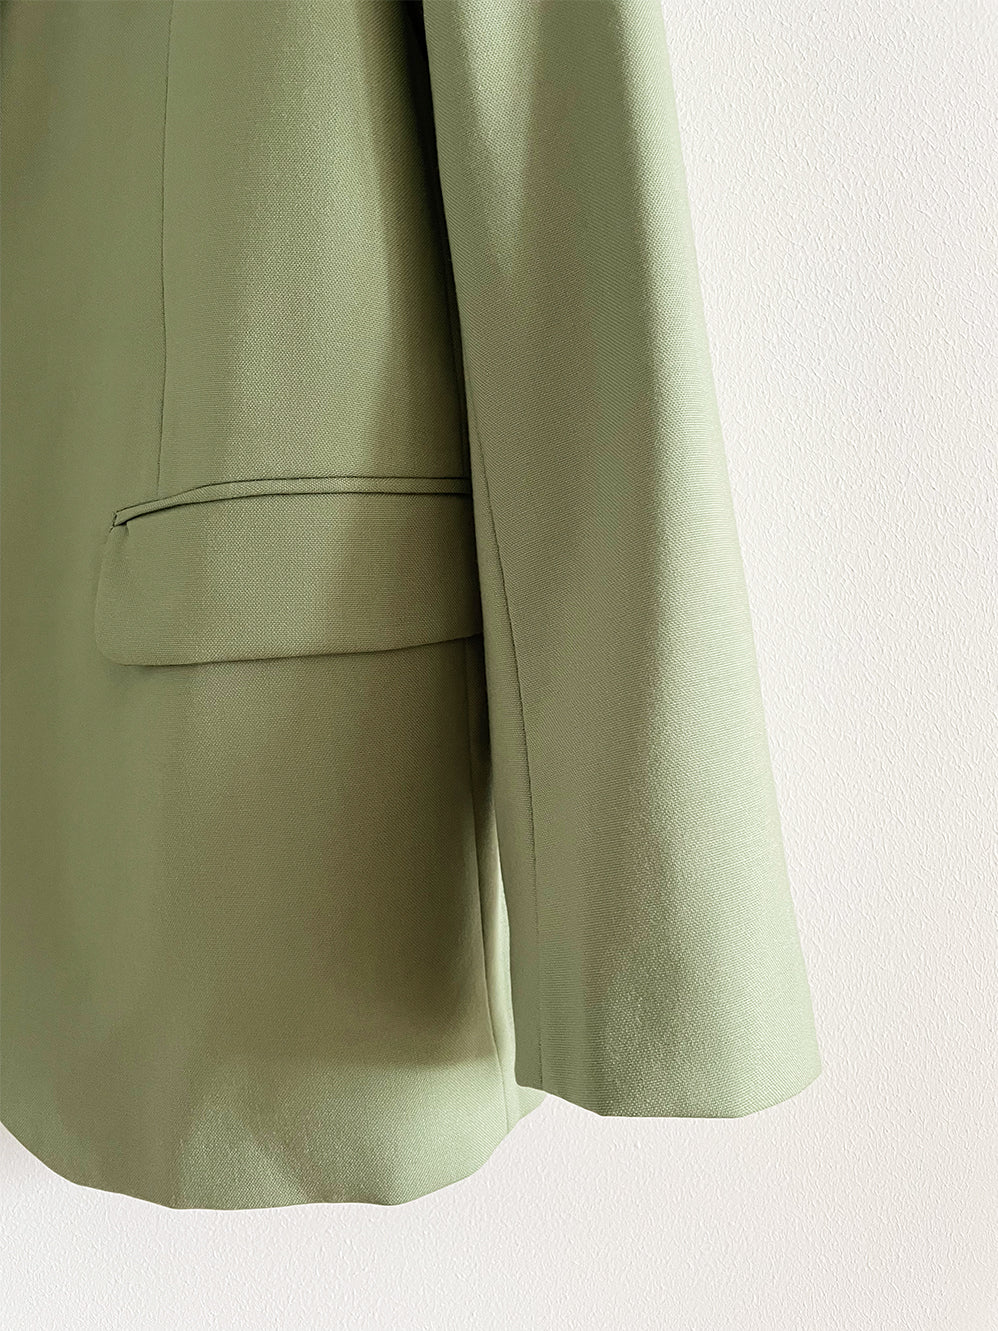 Green/Sage Oversized Blazer, Size XL